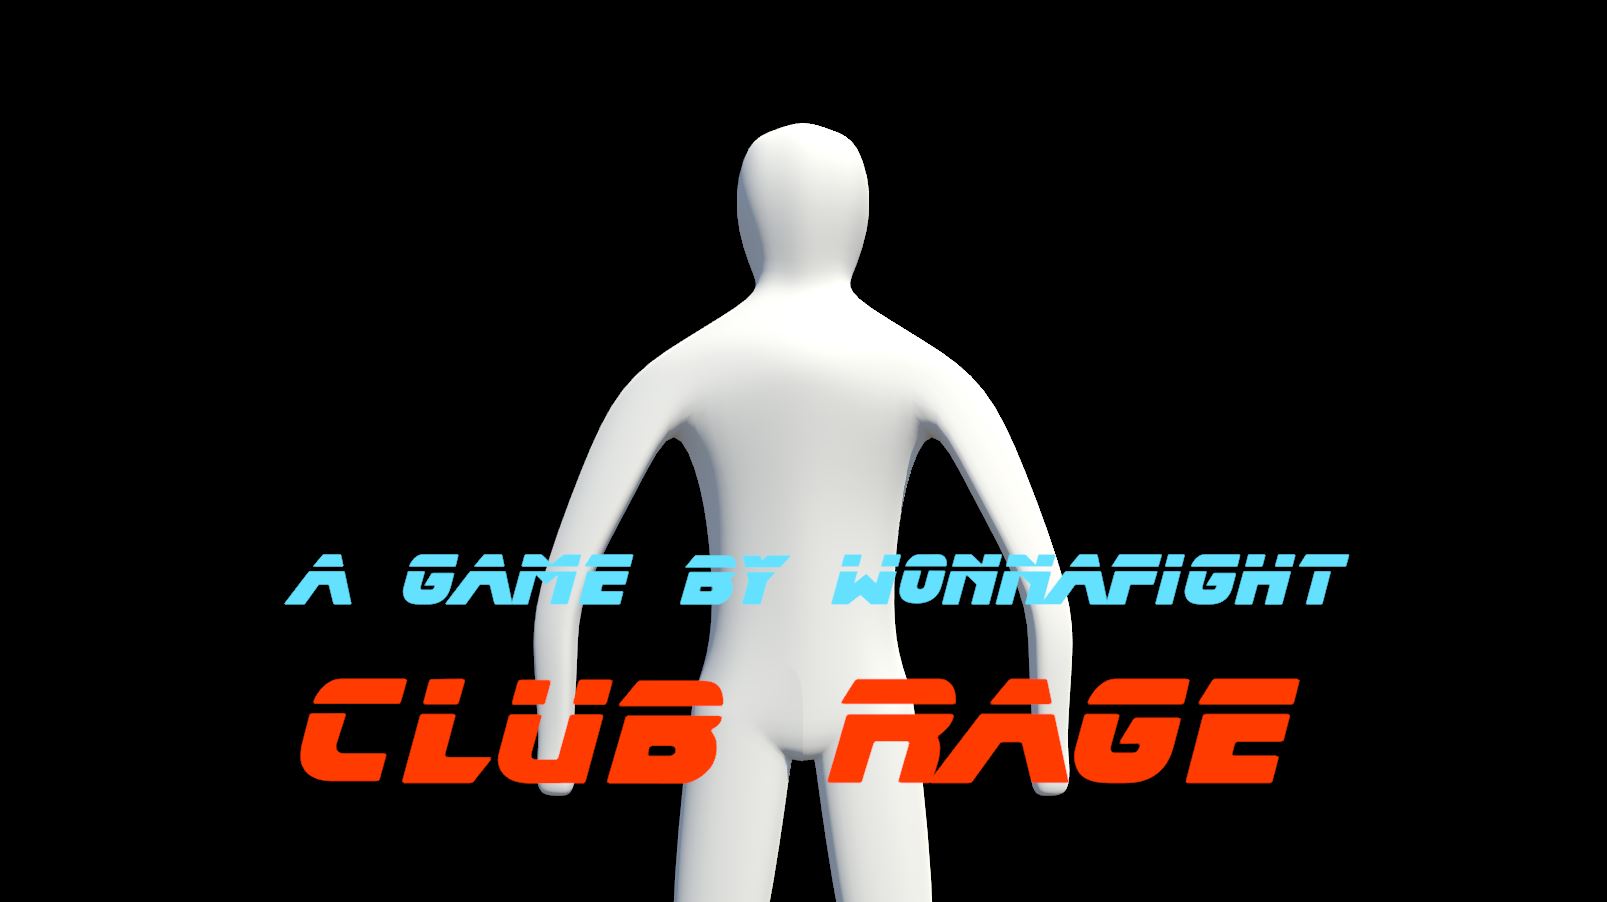 Club Rage